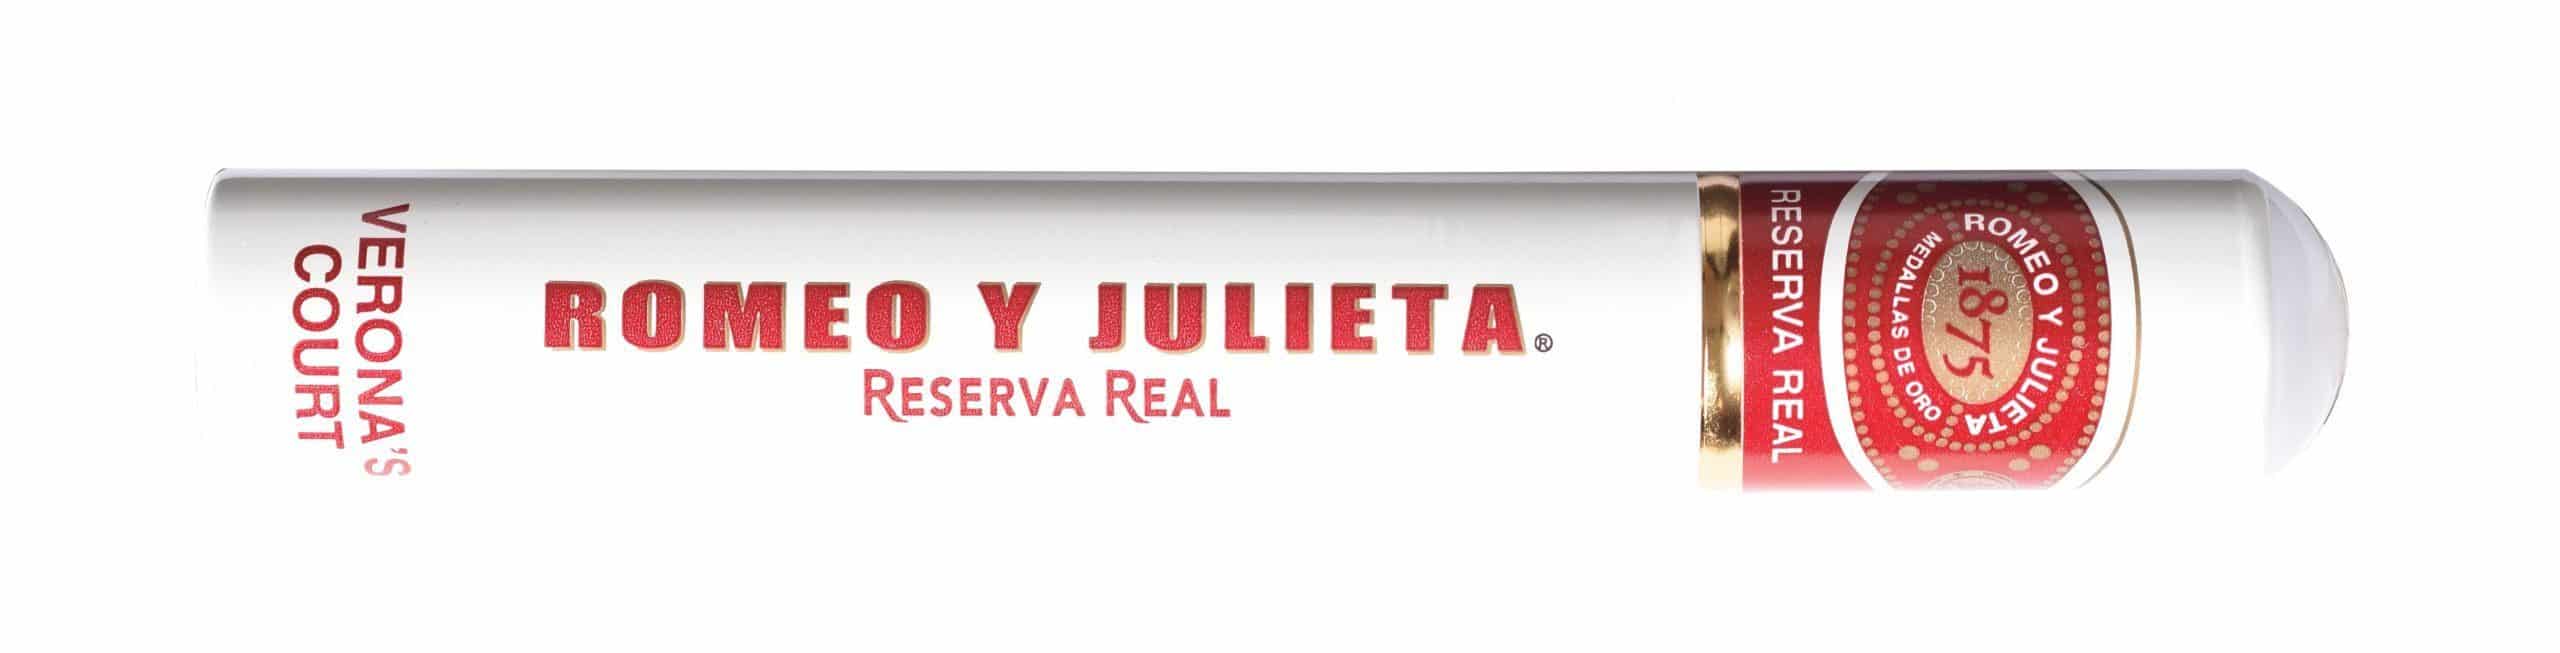 romeo y julieta reserva real verona's court tube single cigar